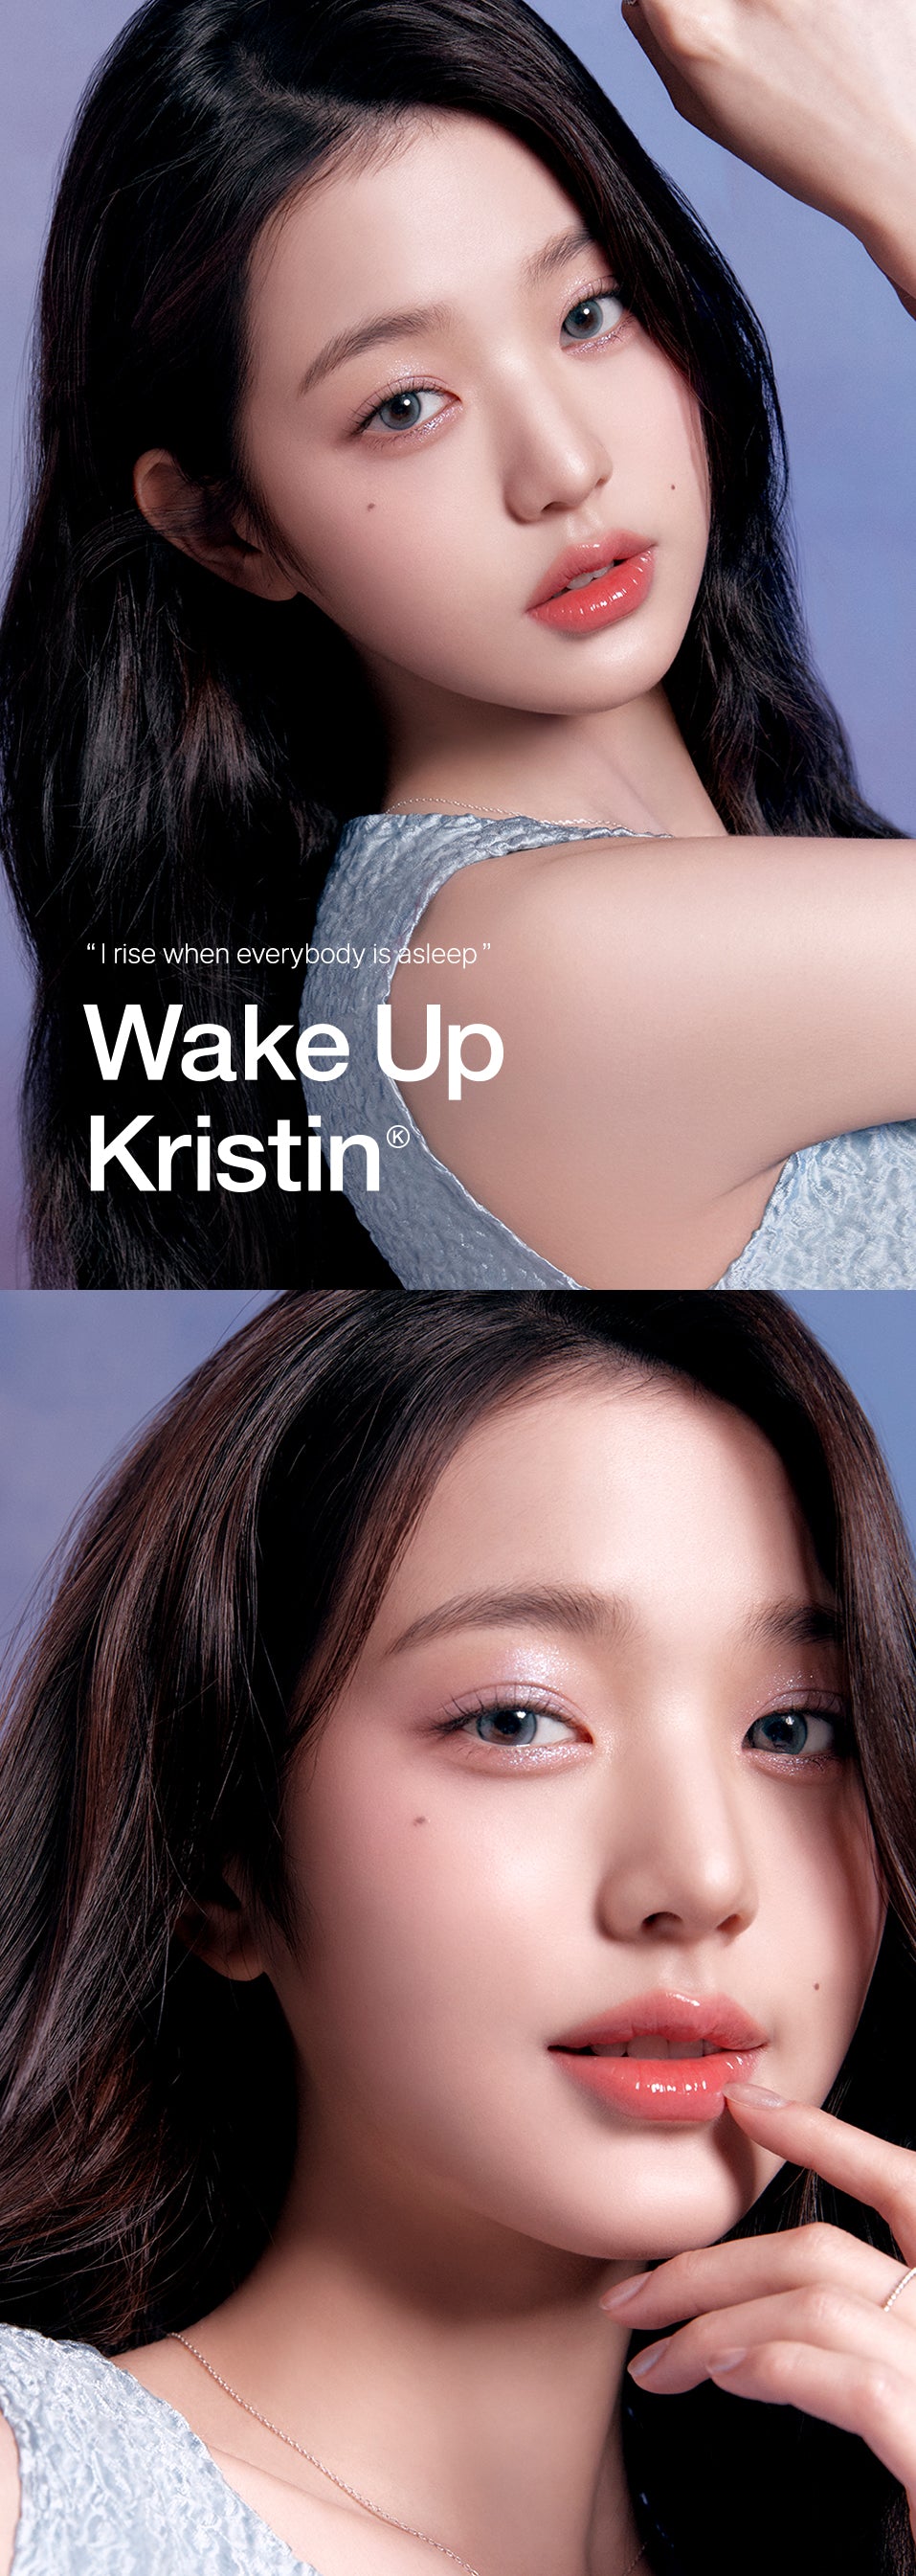 Hapa Kristin Wake Up Kristin Pale Gray | 1 Month